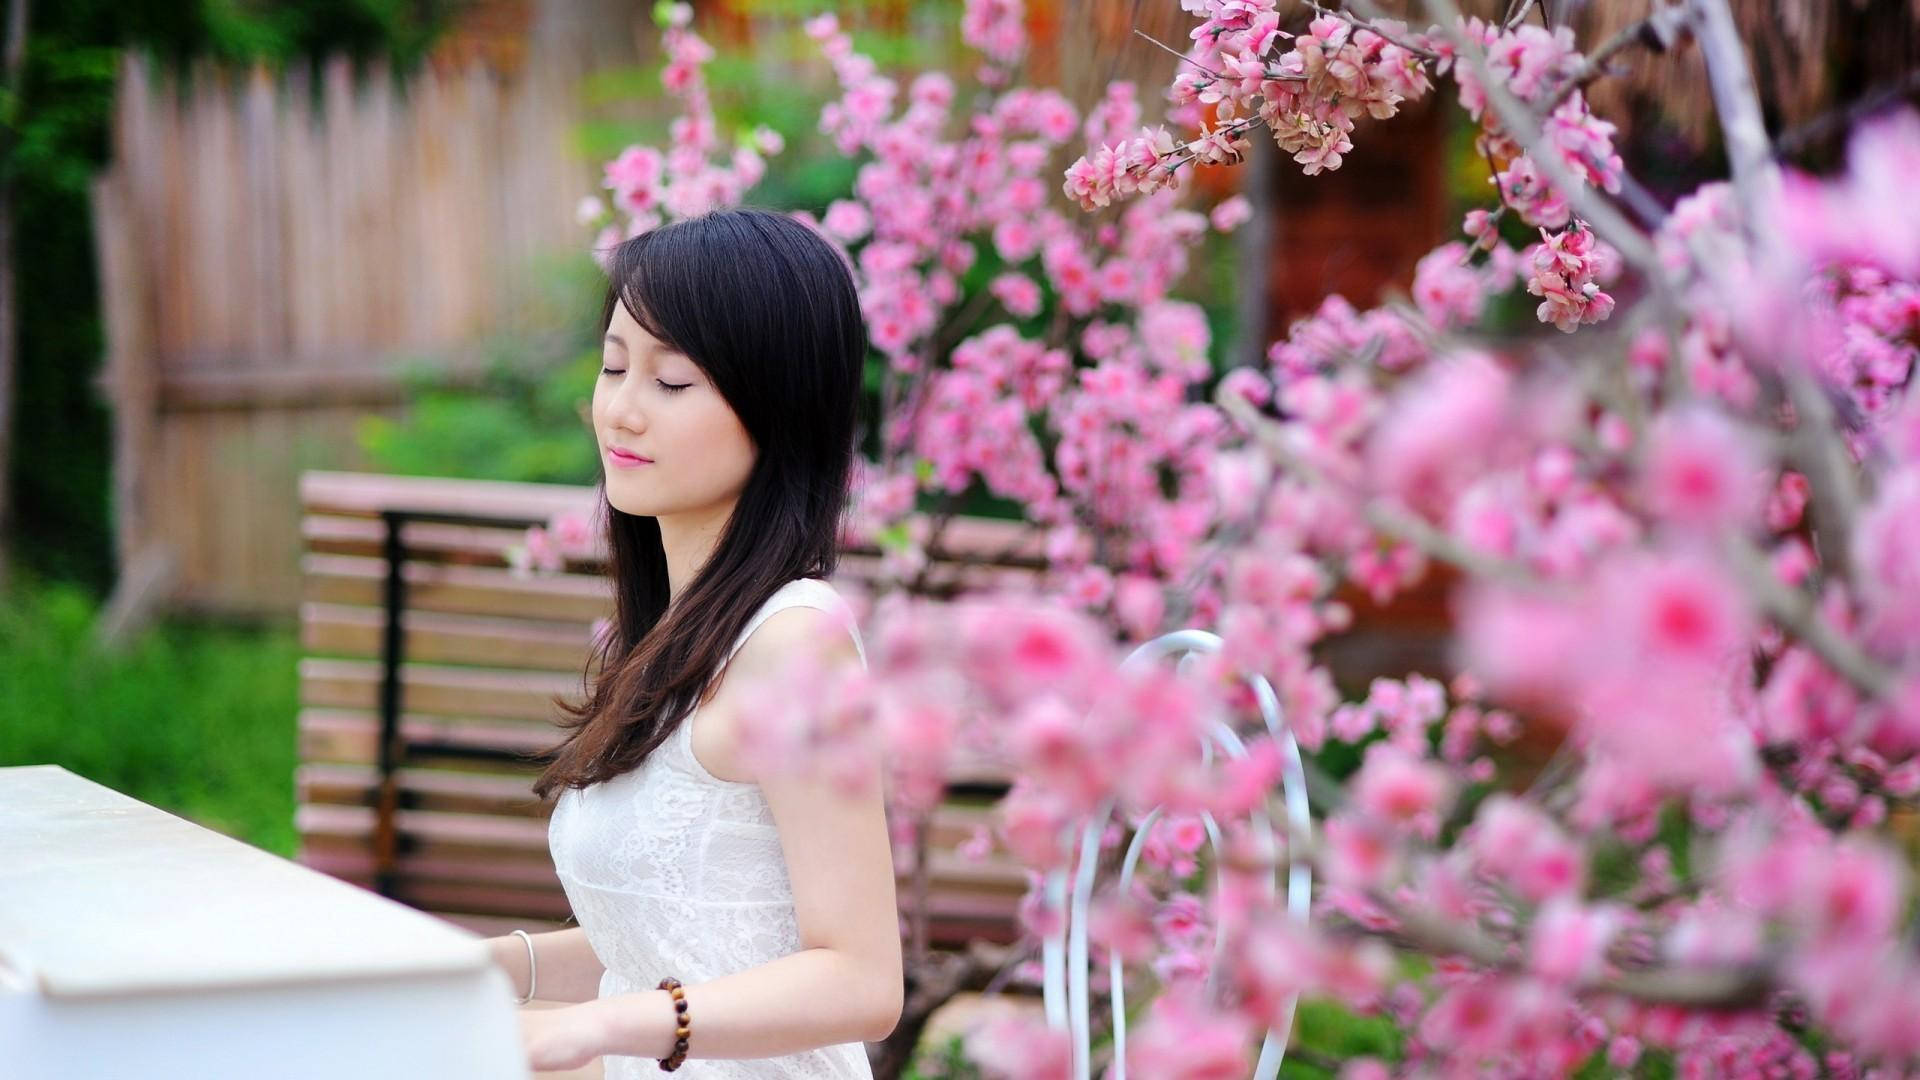 Japan Girl Playing Piano Pink Garden Flowers